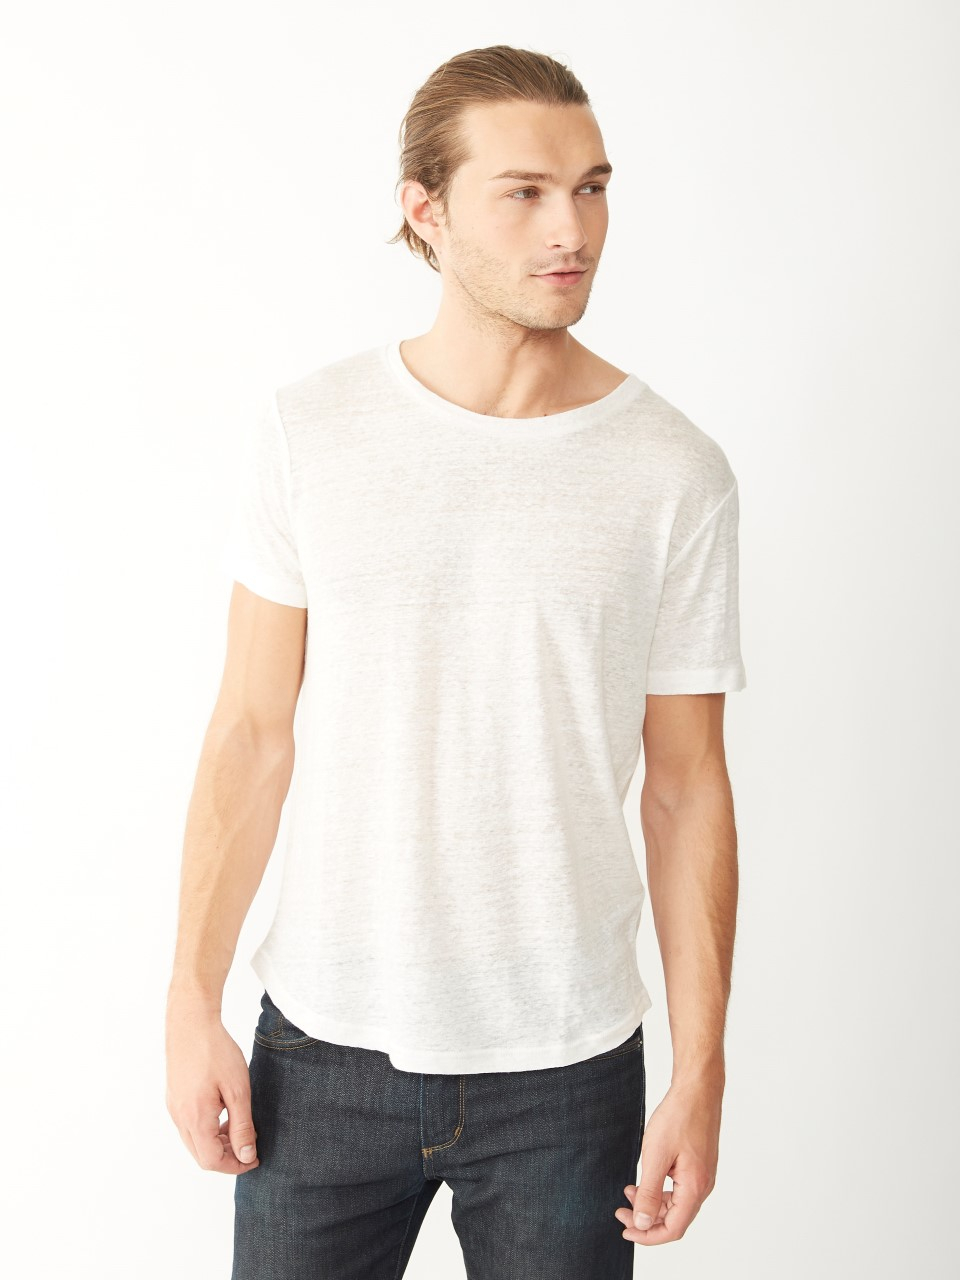 Lyst - Alternative Apparel Wide Neck Linen Tshirt in White for Men